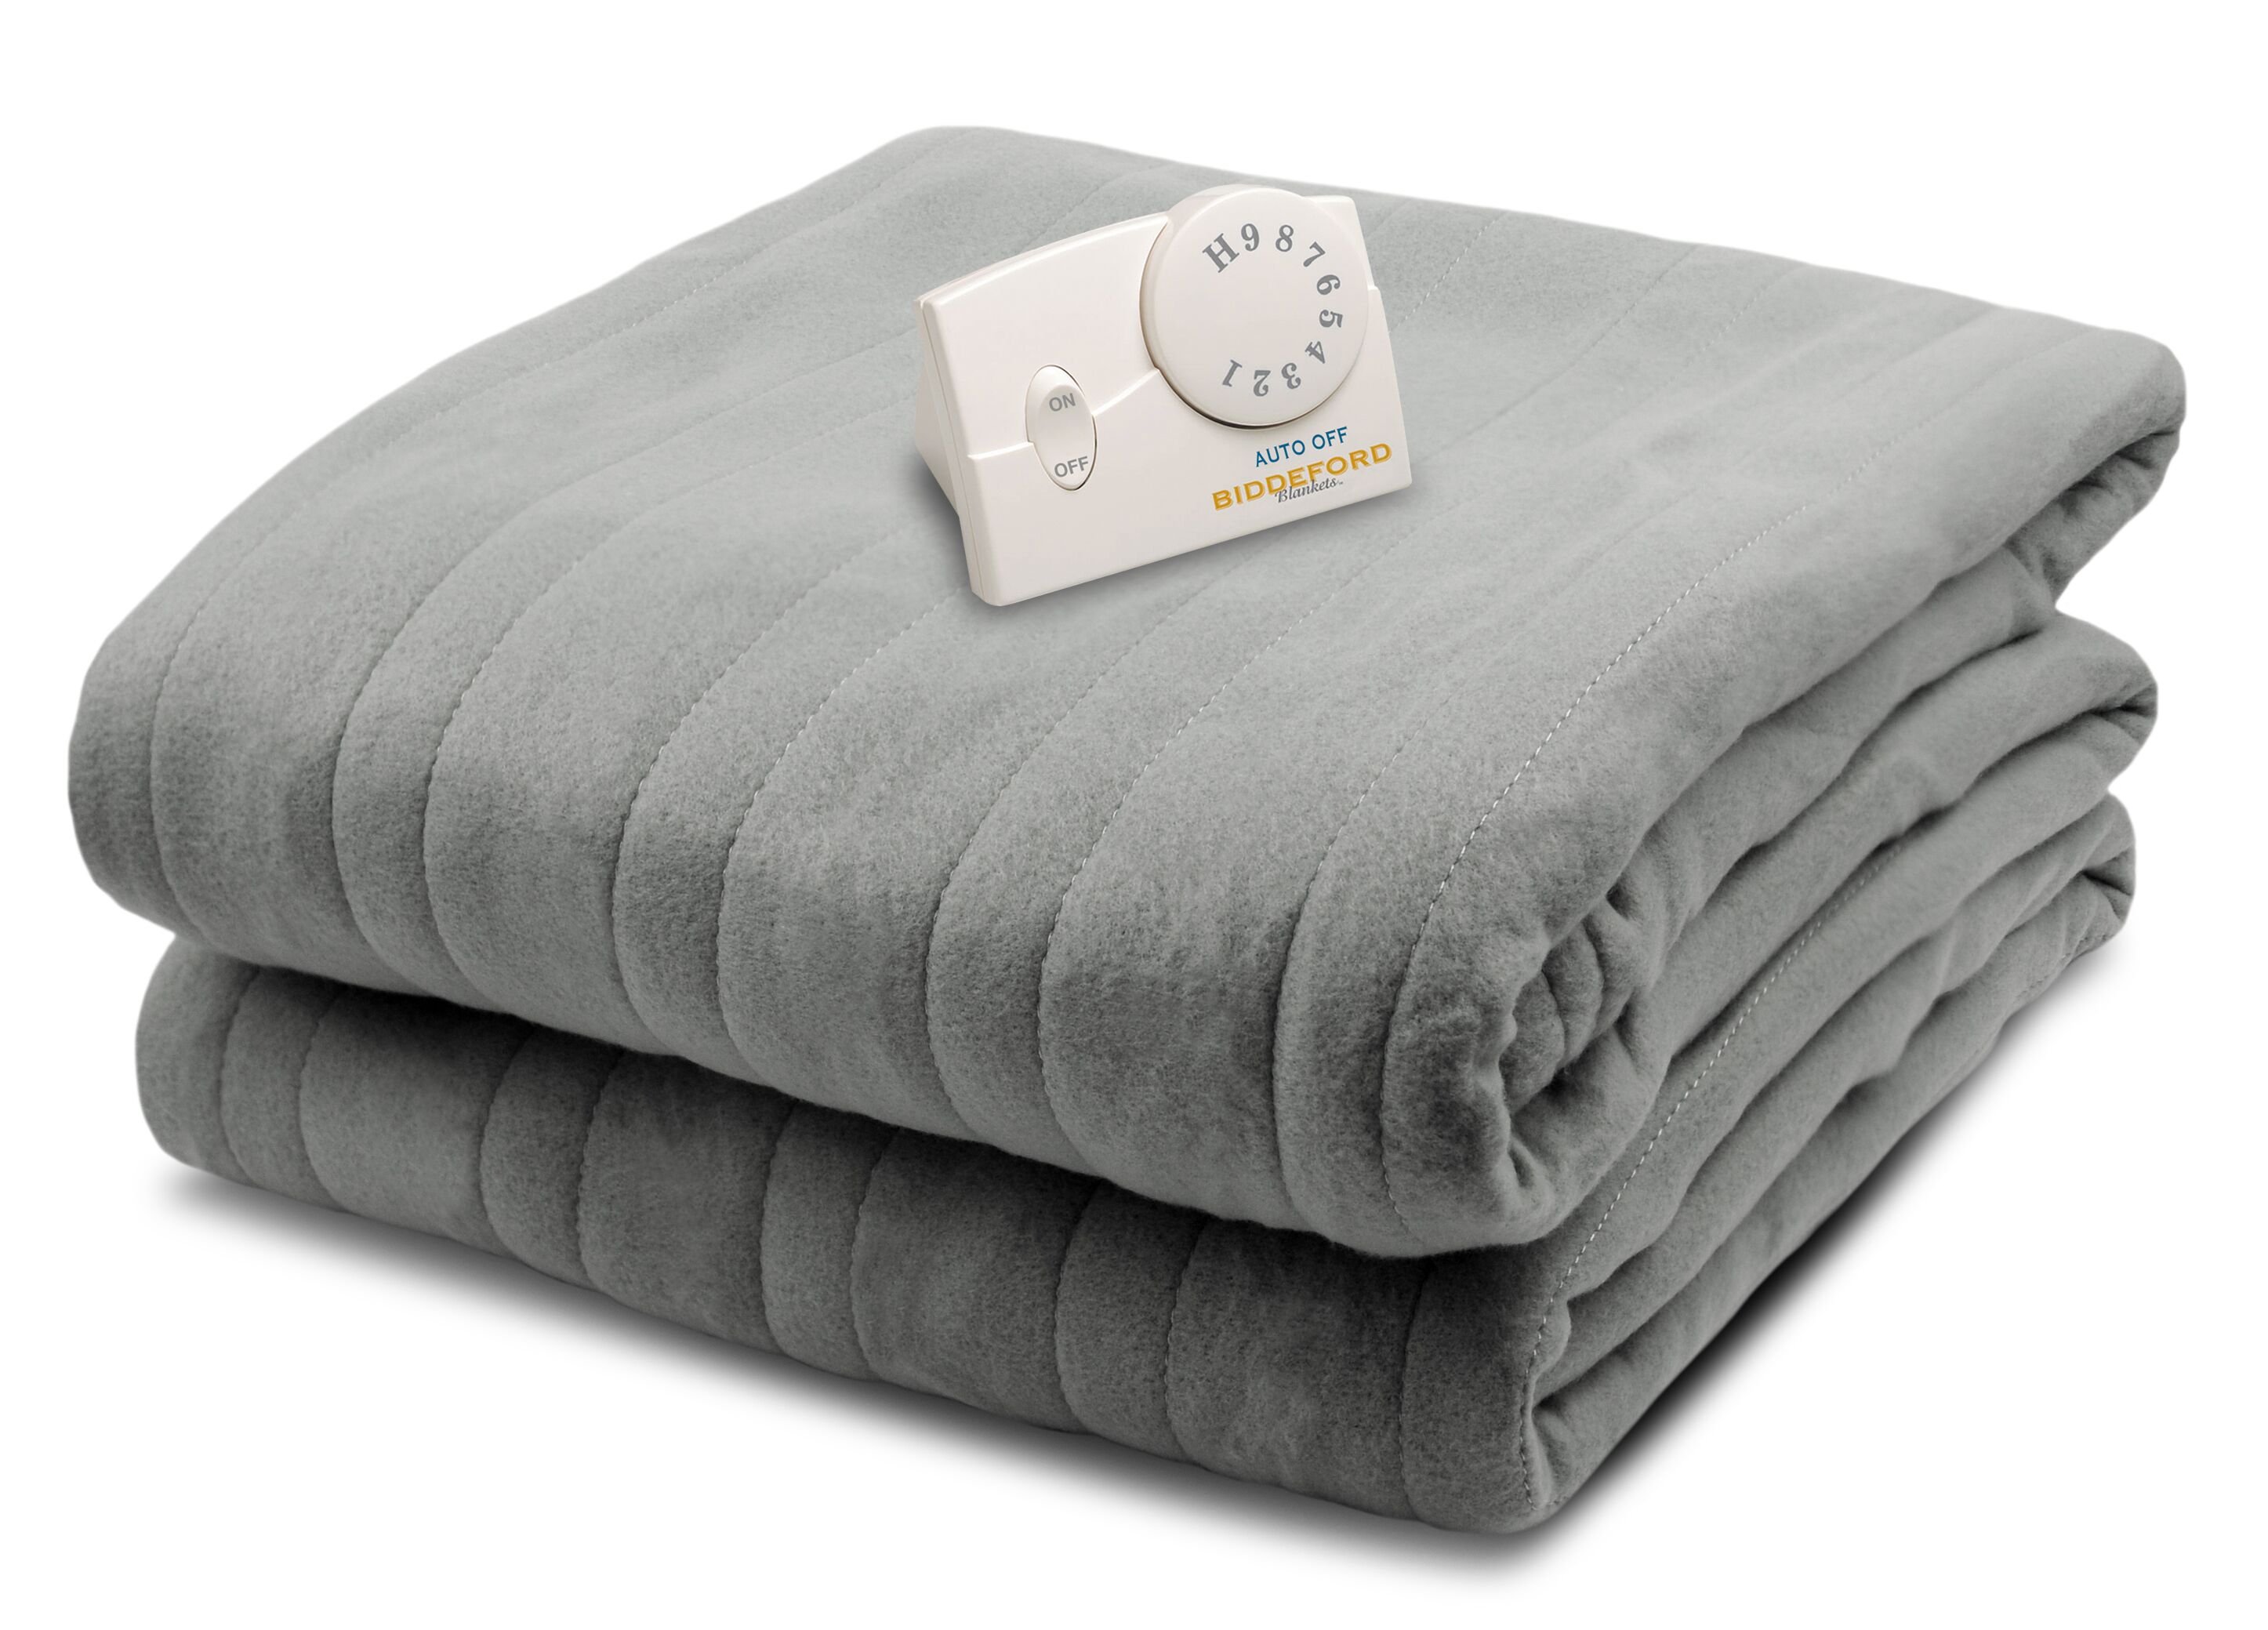 Biddeford Blankets Comfort Knit Fleece Heated Electric Blanket, Twin, Gray - image 1 of 3